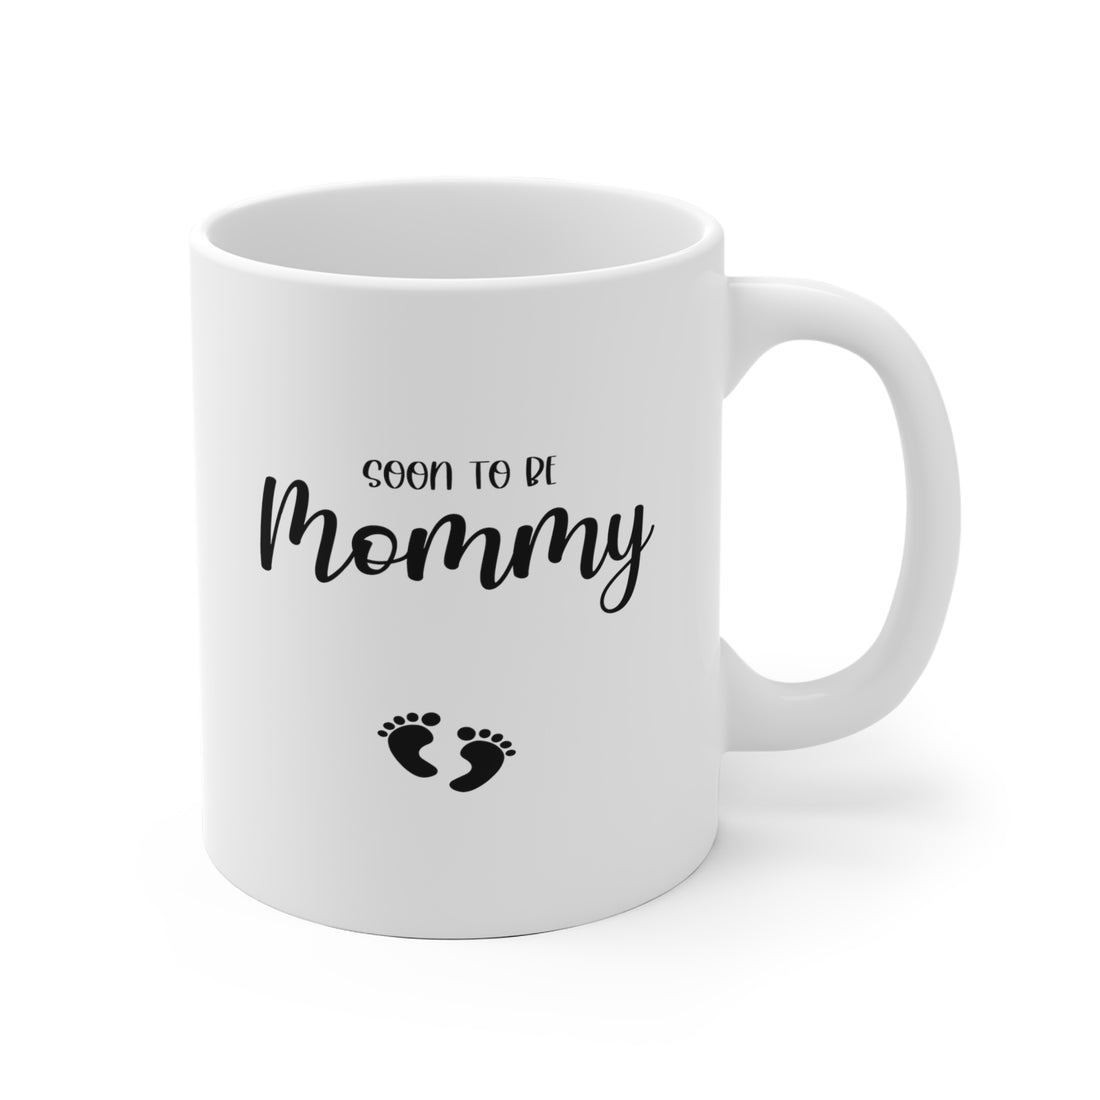 Soon To Be Mommy - White Ceramic Mug 2 sizes Available